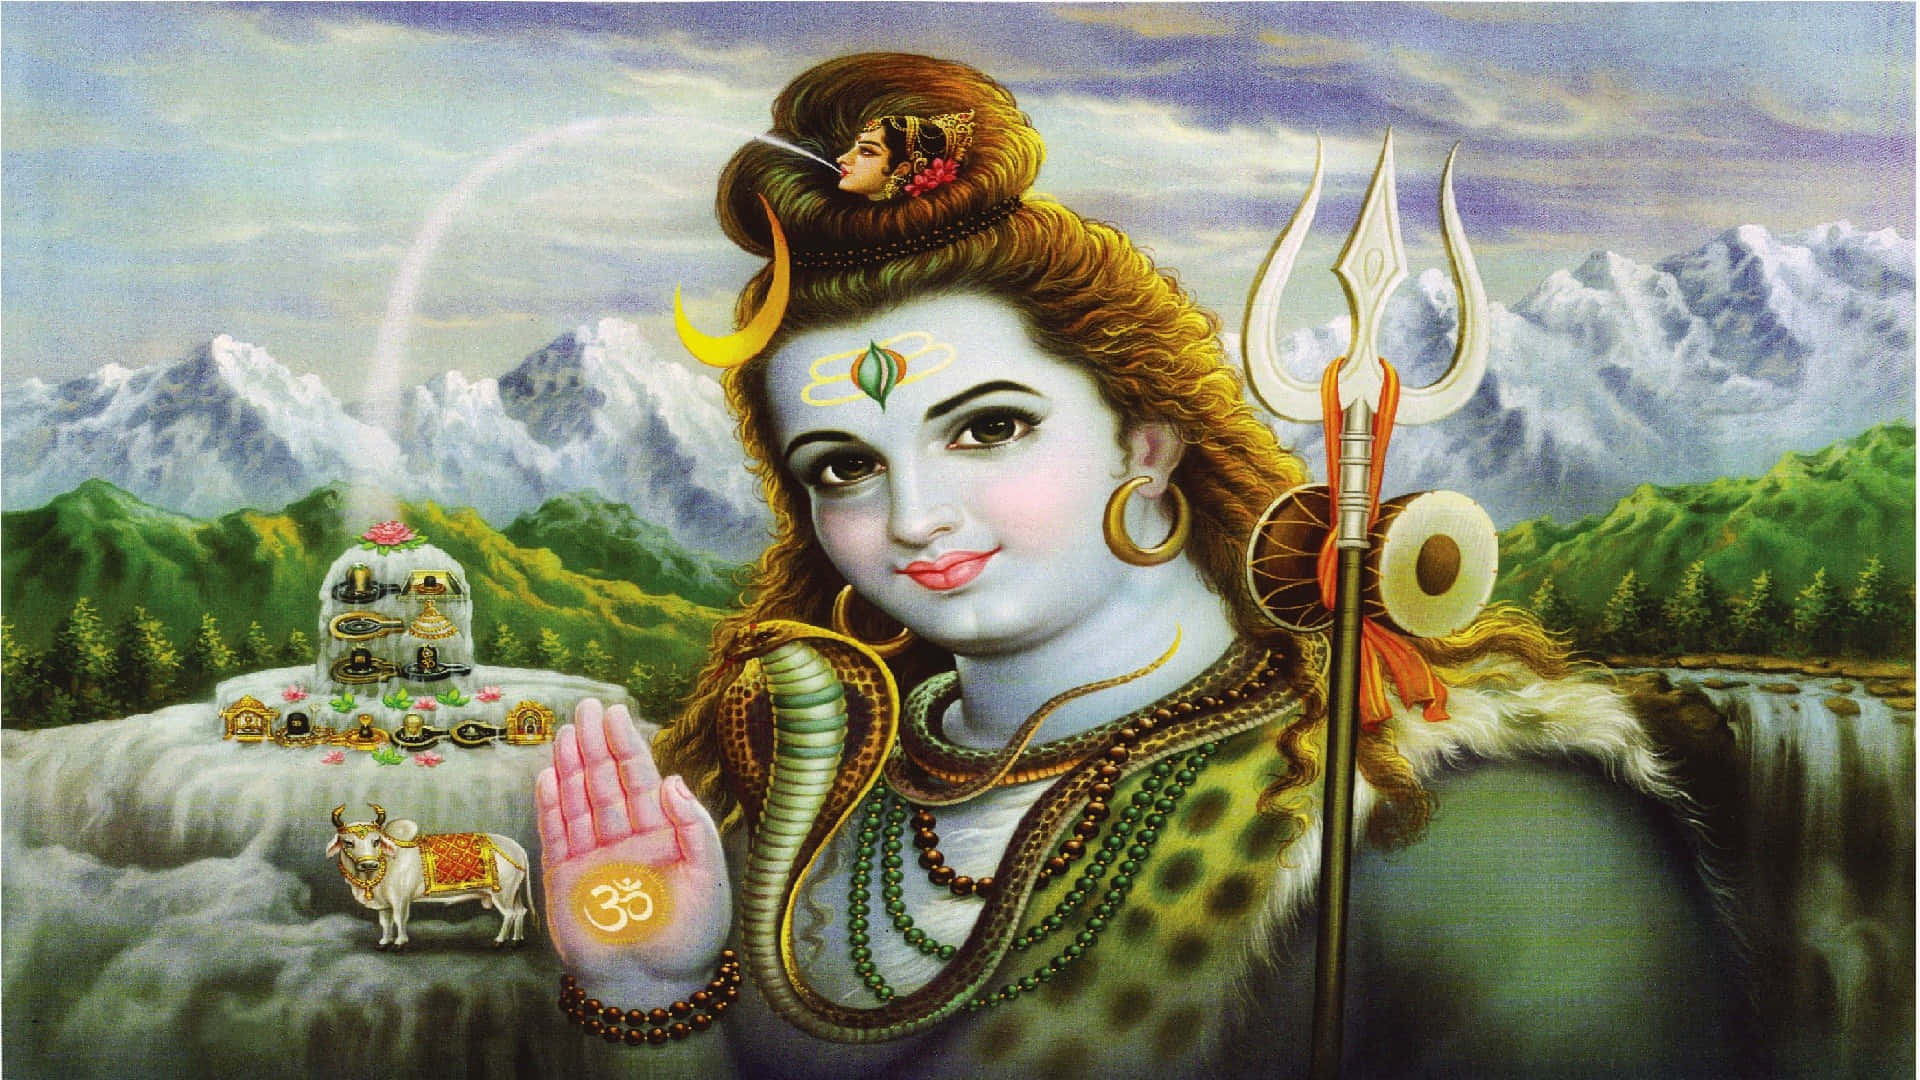 The Eternal Lord Shiva